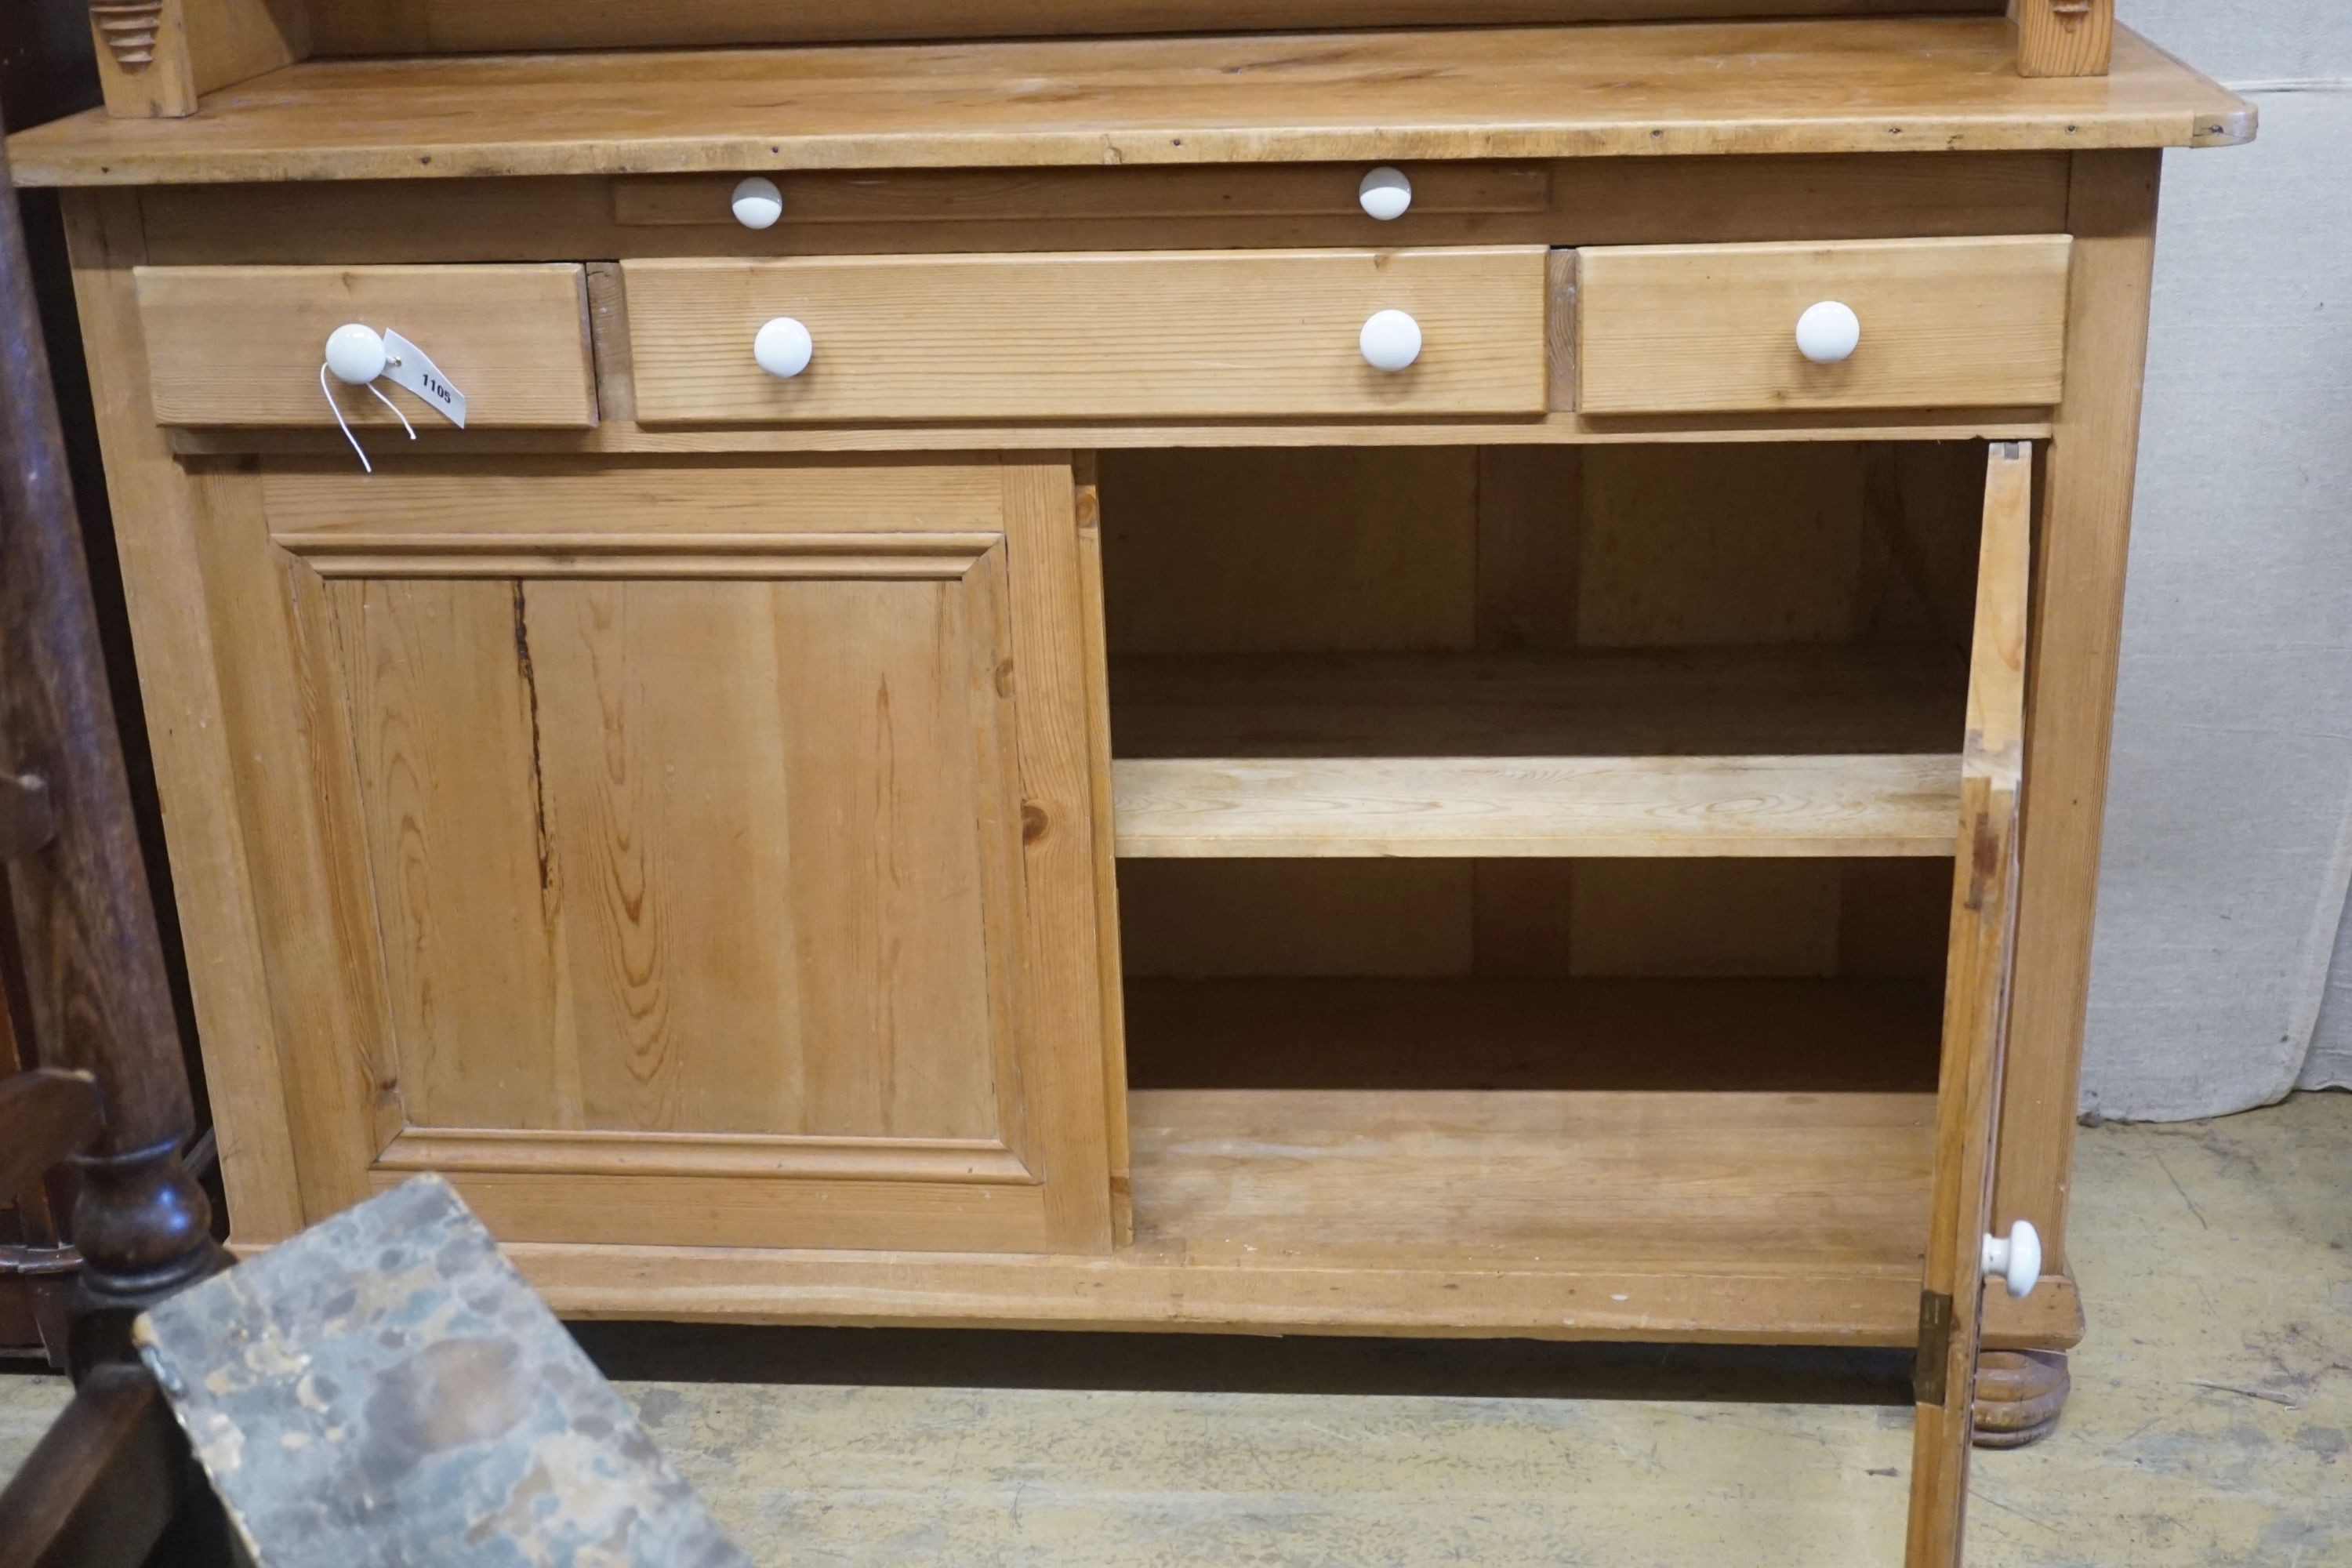 A 19th century Continental pine glazed side cabinet, width 142cm, depth 55cm, height 180cm